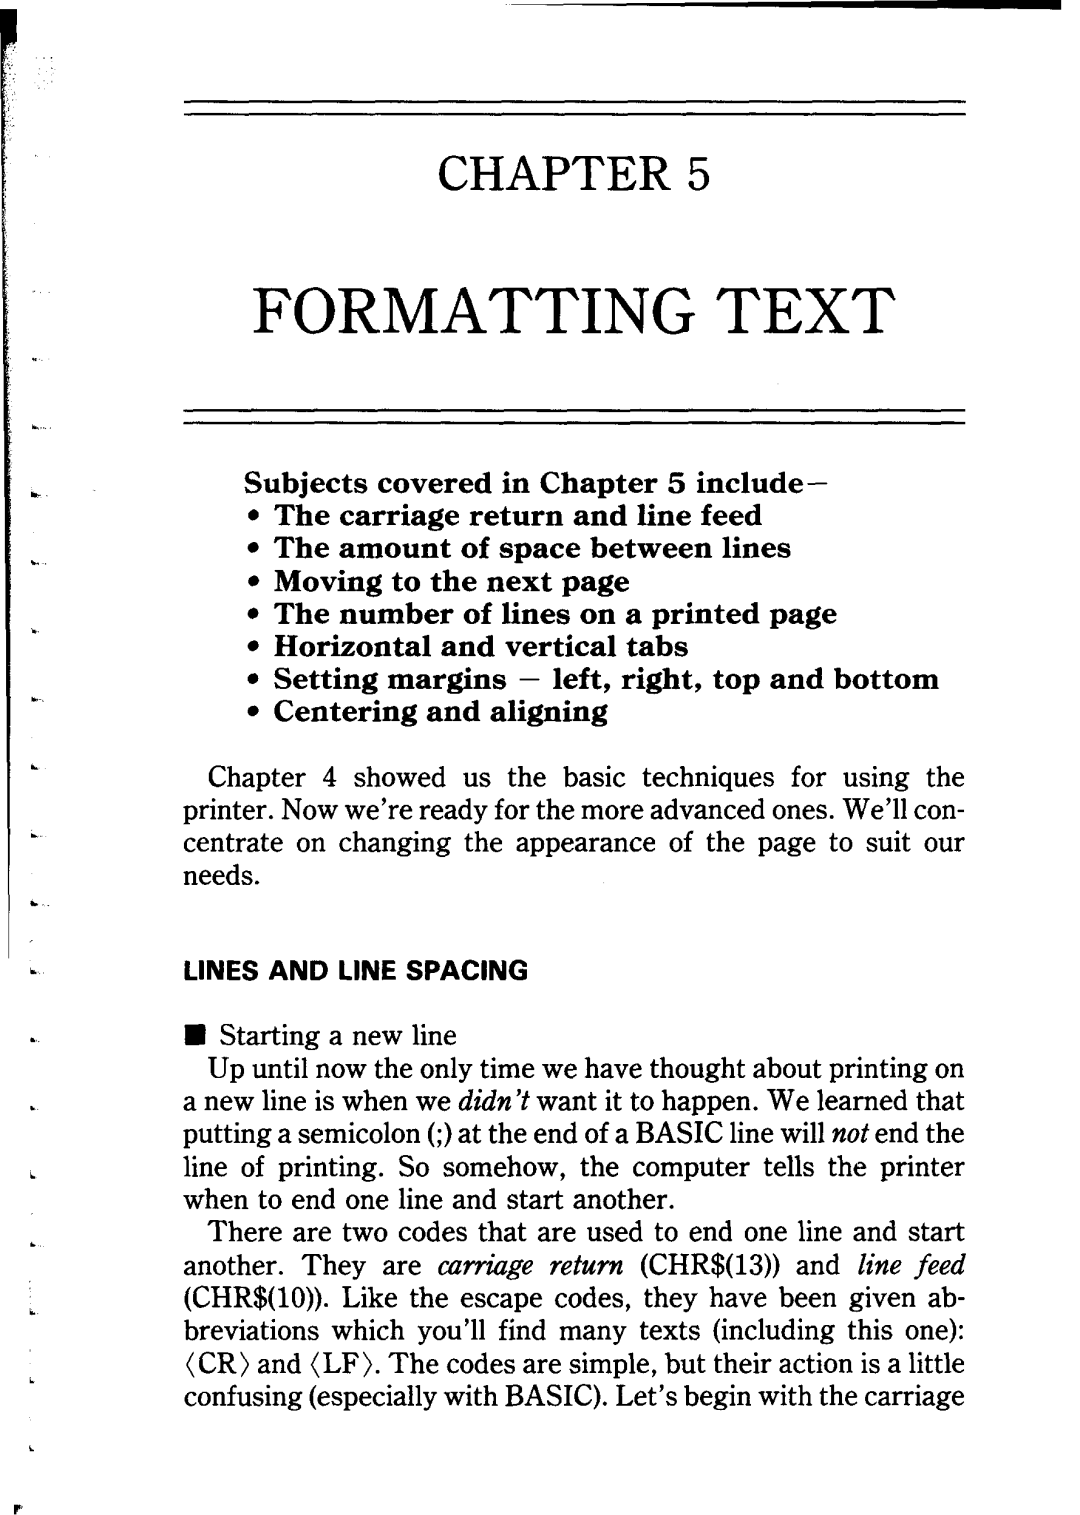 Star Micronics NB24-10/15 user manual Chapter, Formatting Text 